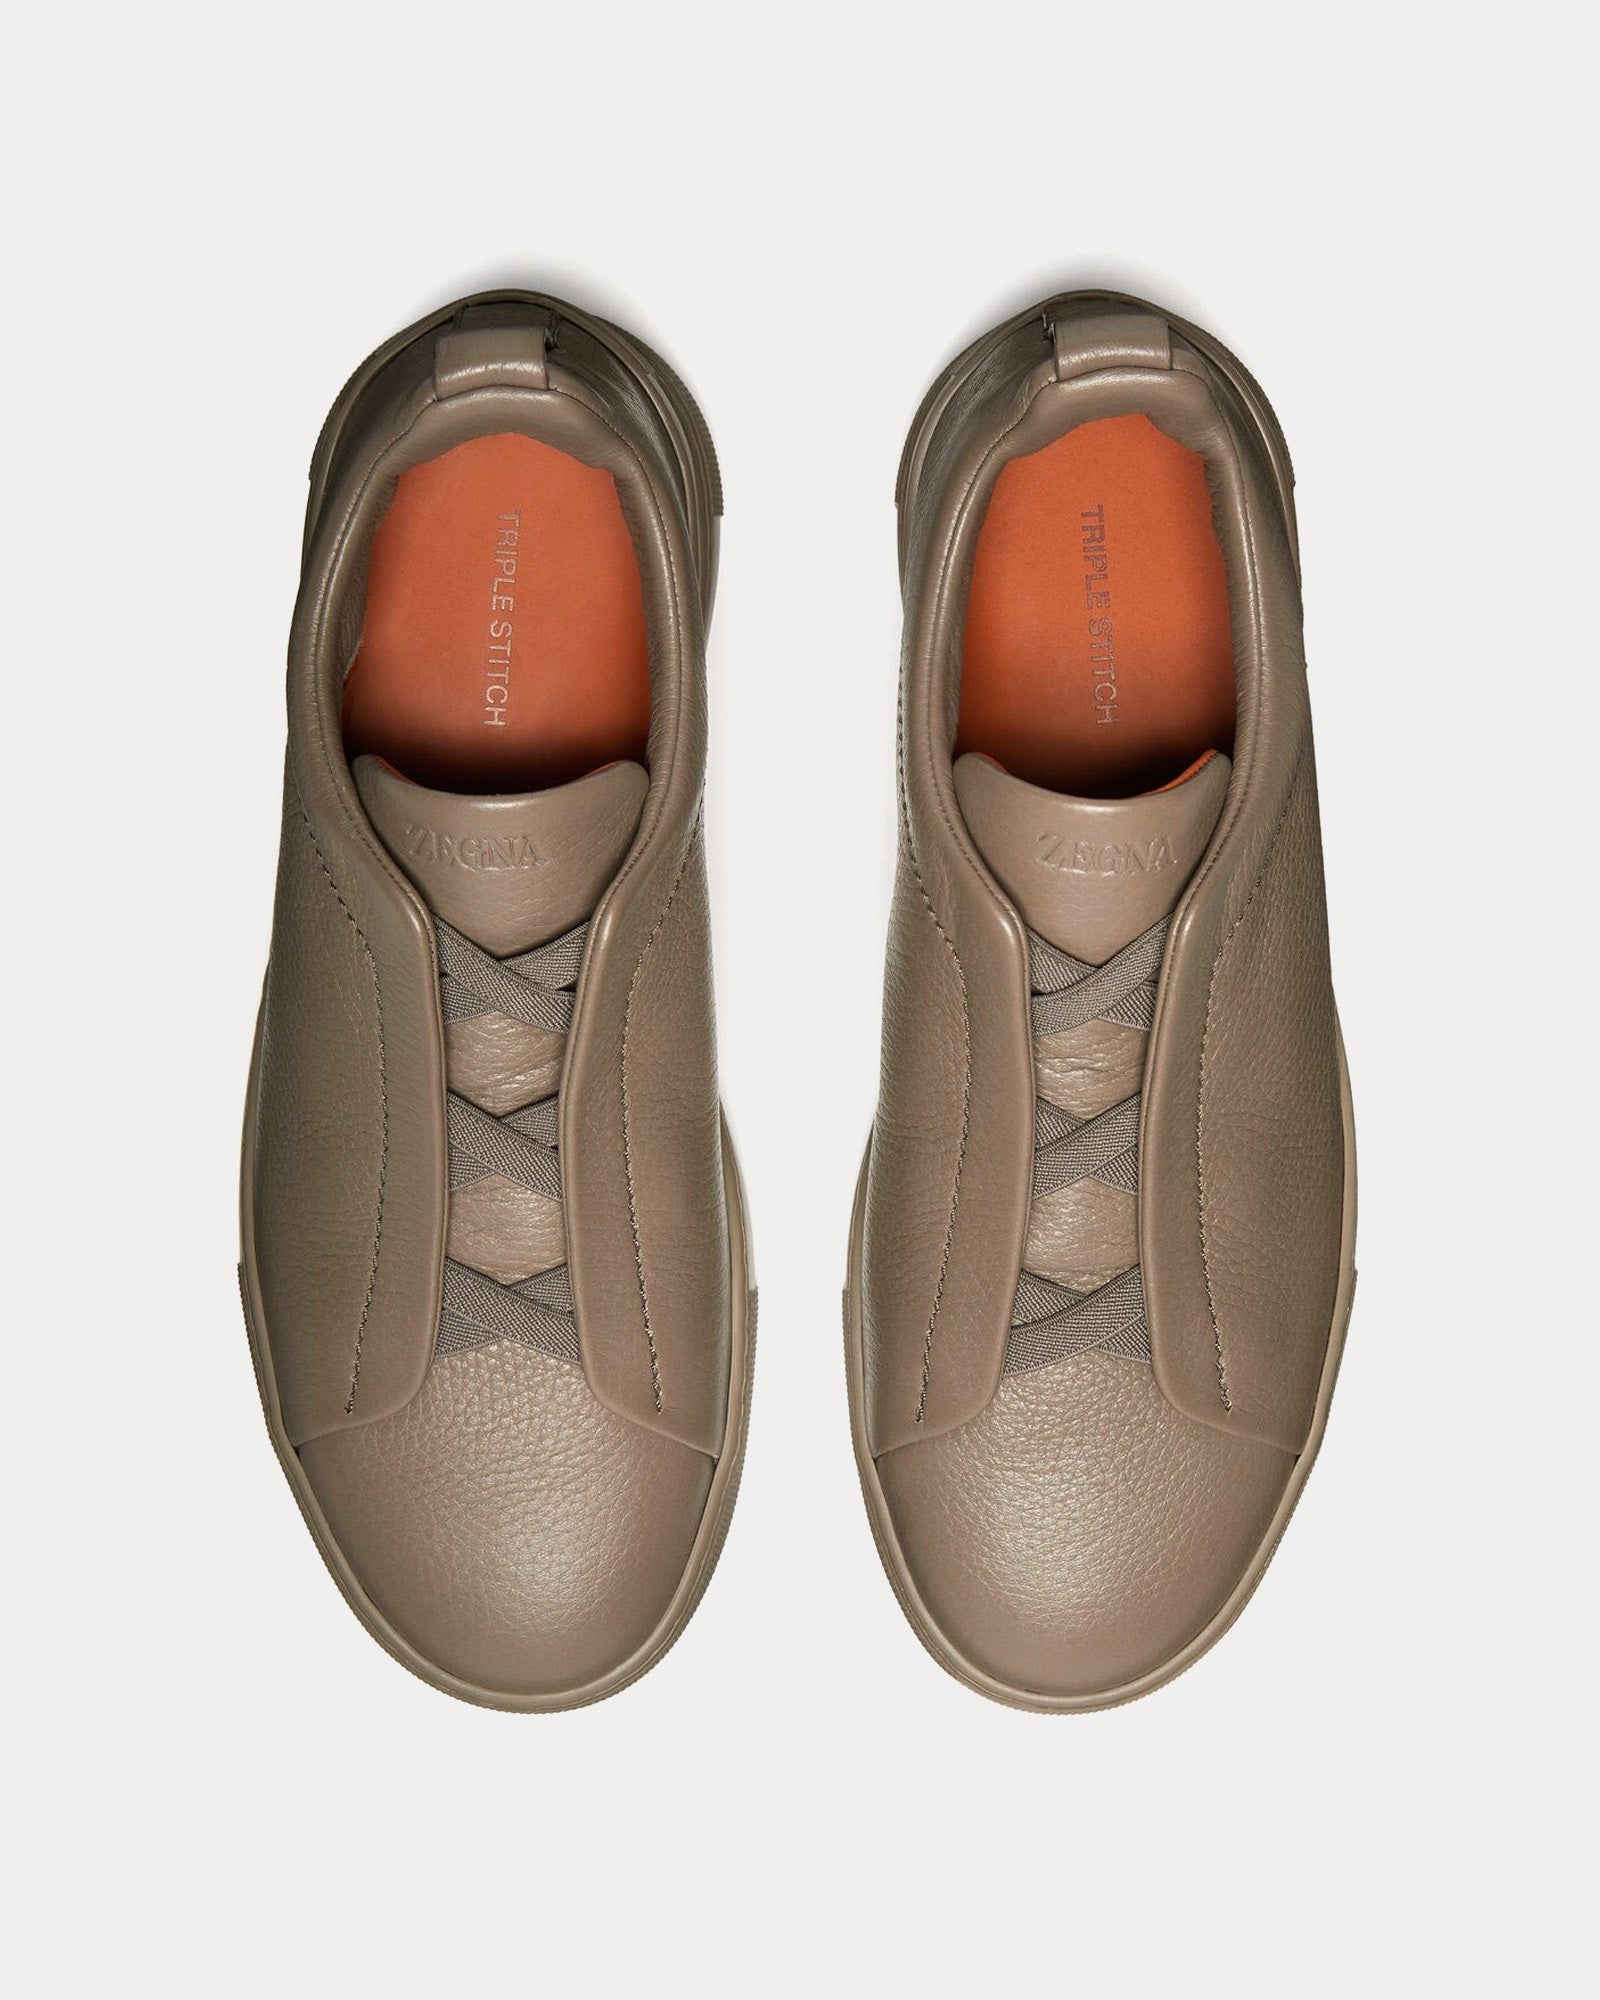 Zegna - Triple Stitch Deerskin Taupe Slip On Sneakers